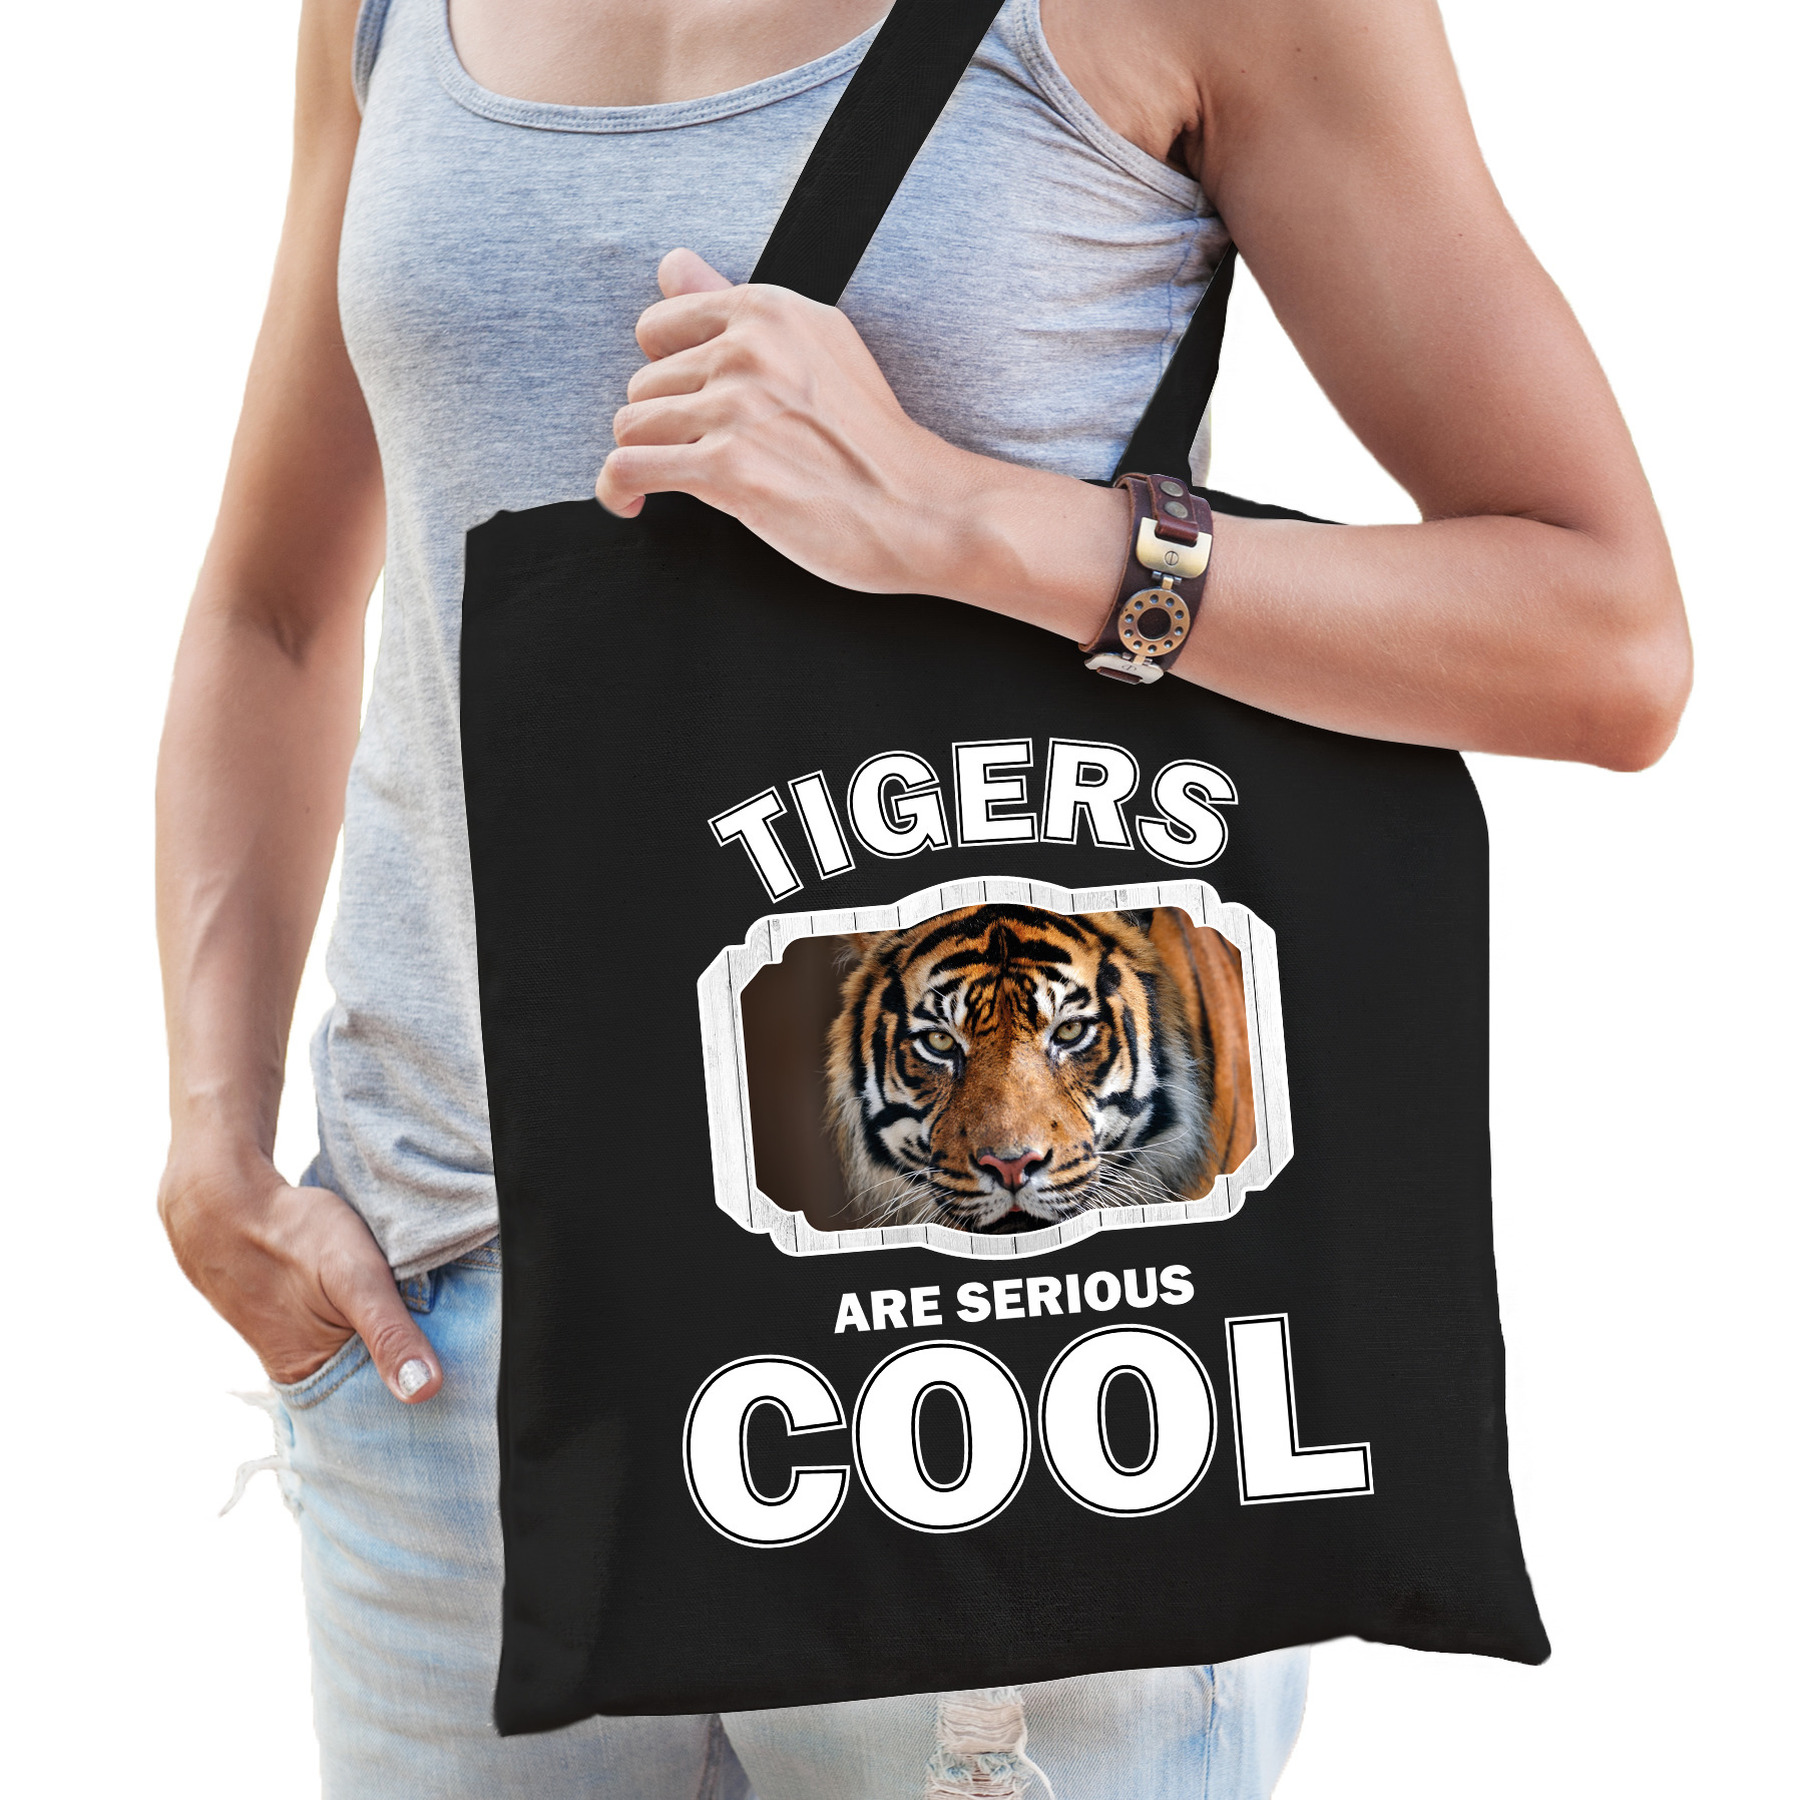 Katoenen tasje tigers are serious cool zwart - tijgers/ tijger cadeau tas